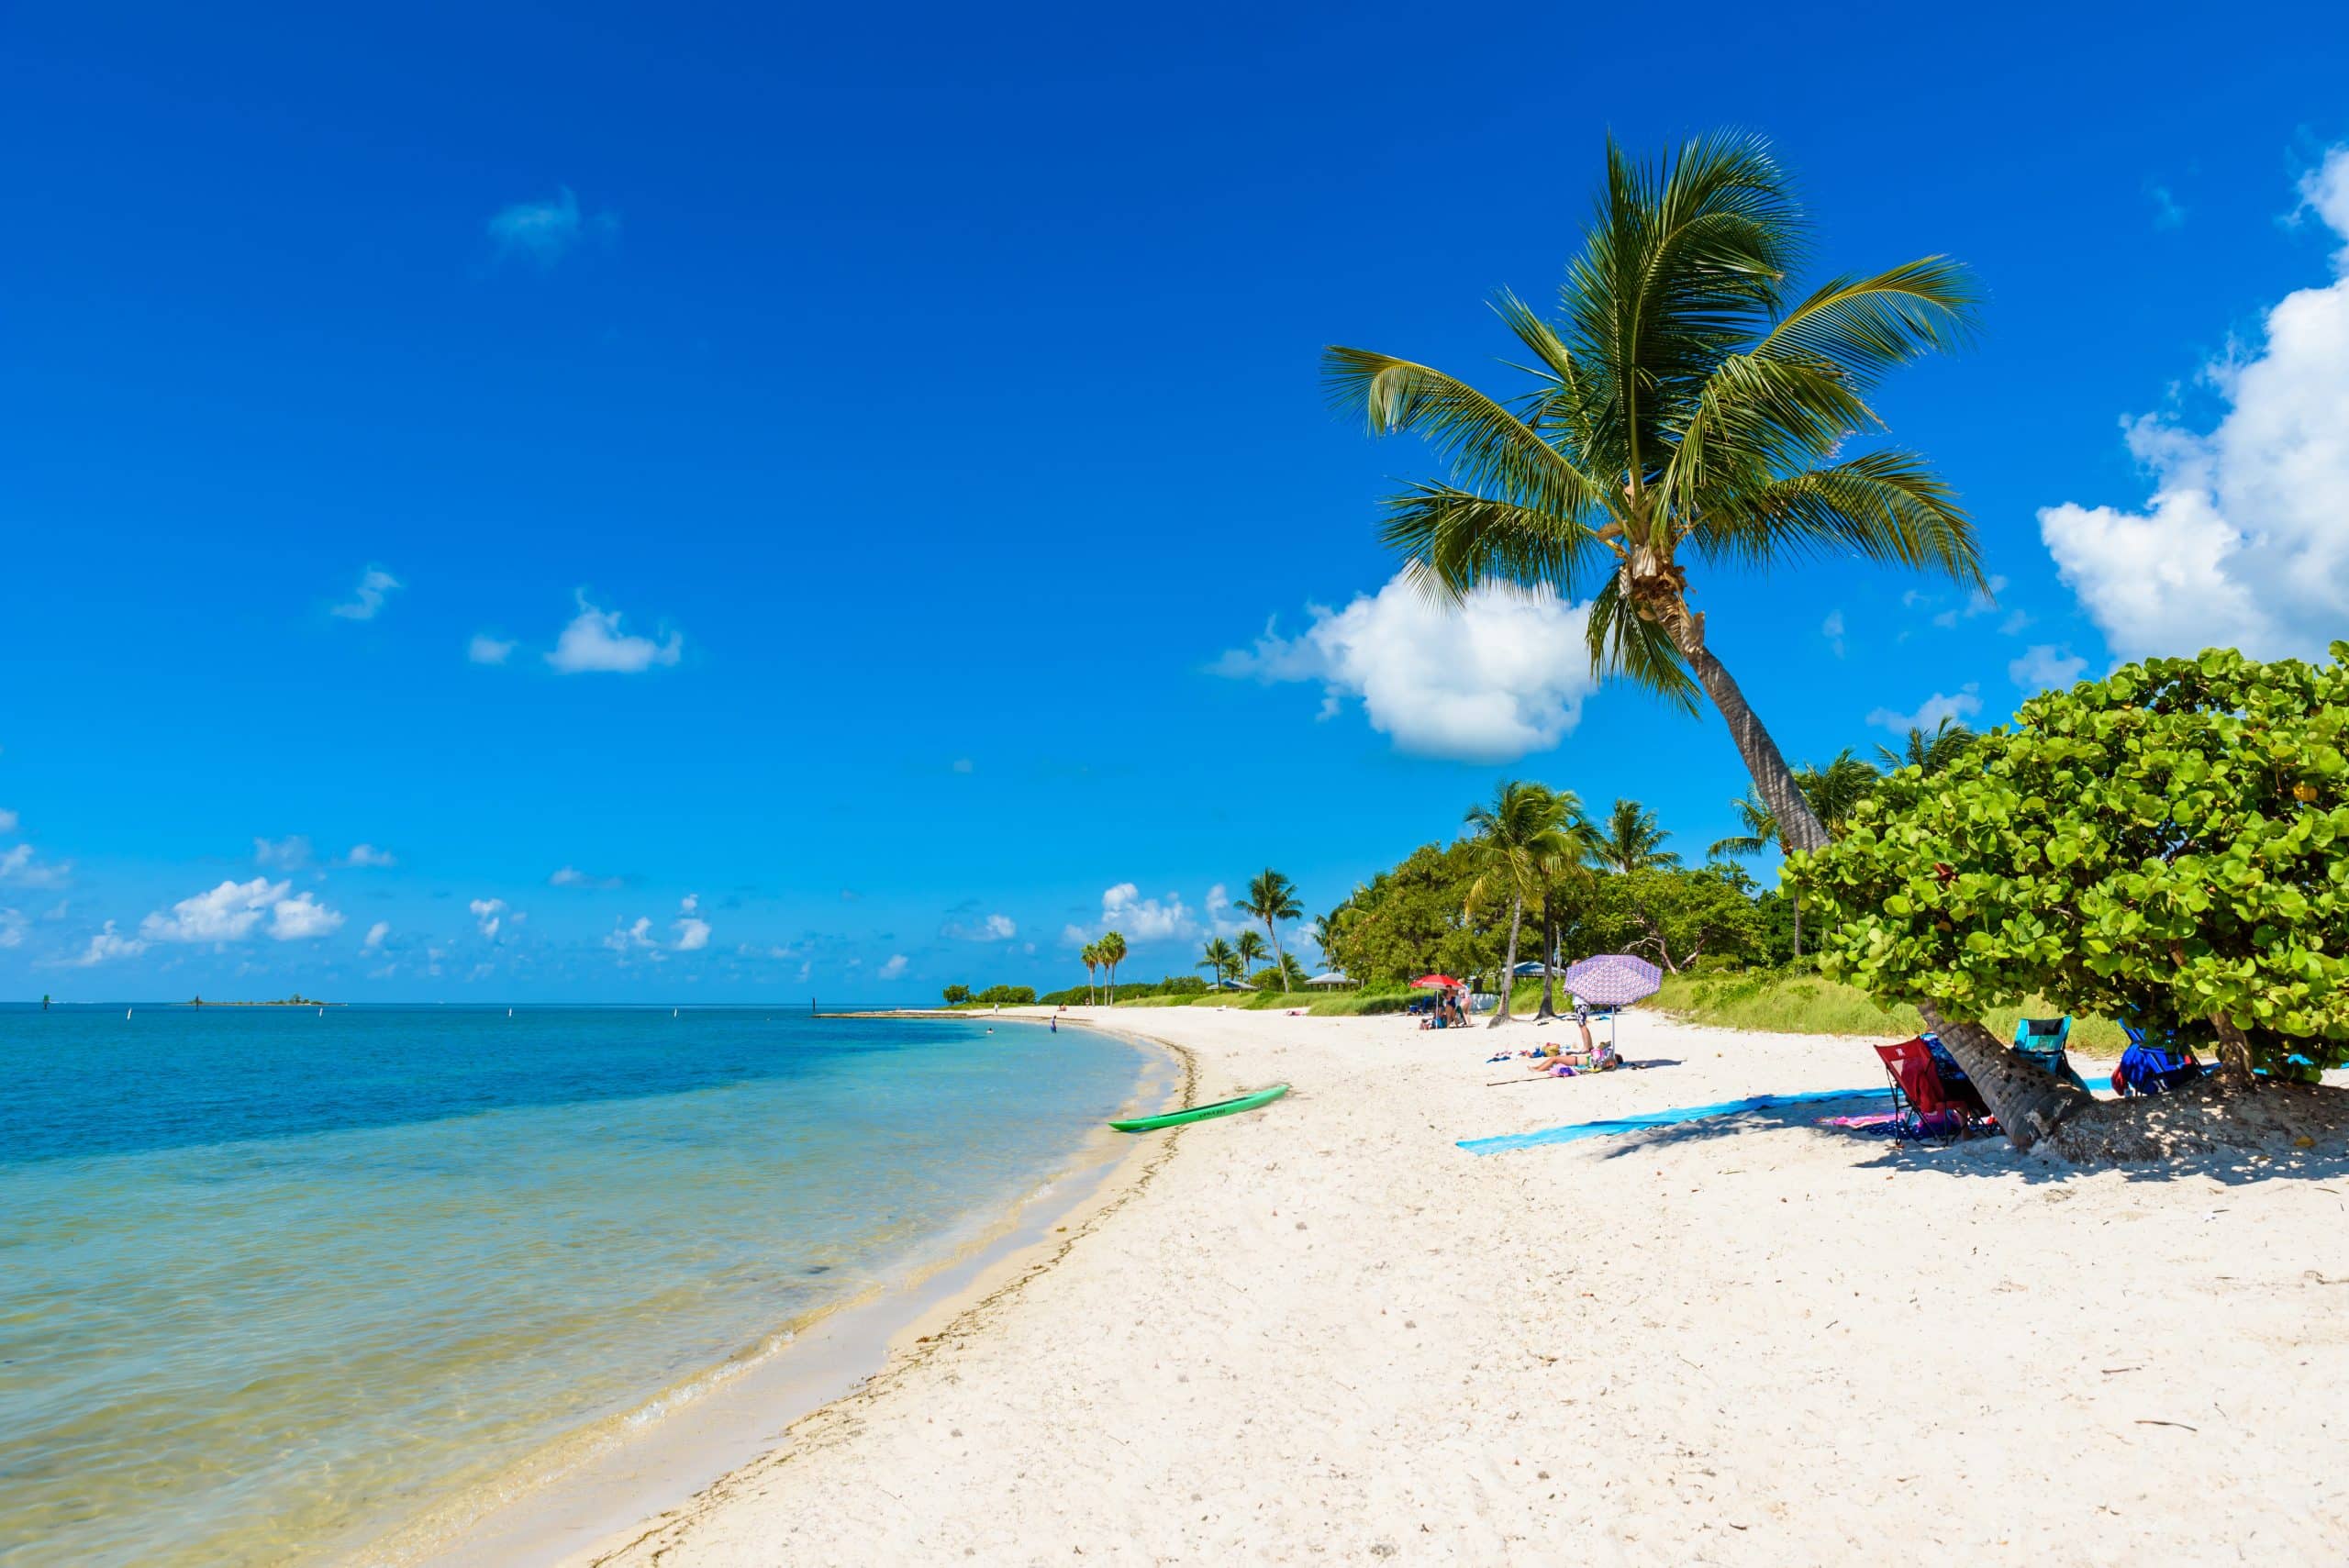 25 Best Florida Keys Beaches (including some surprises!)